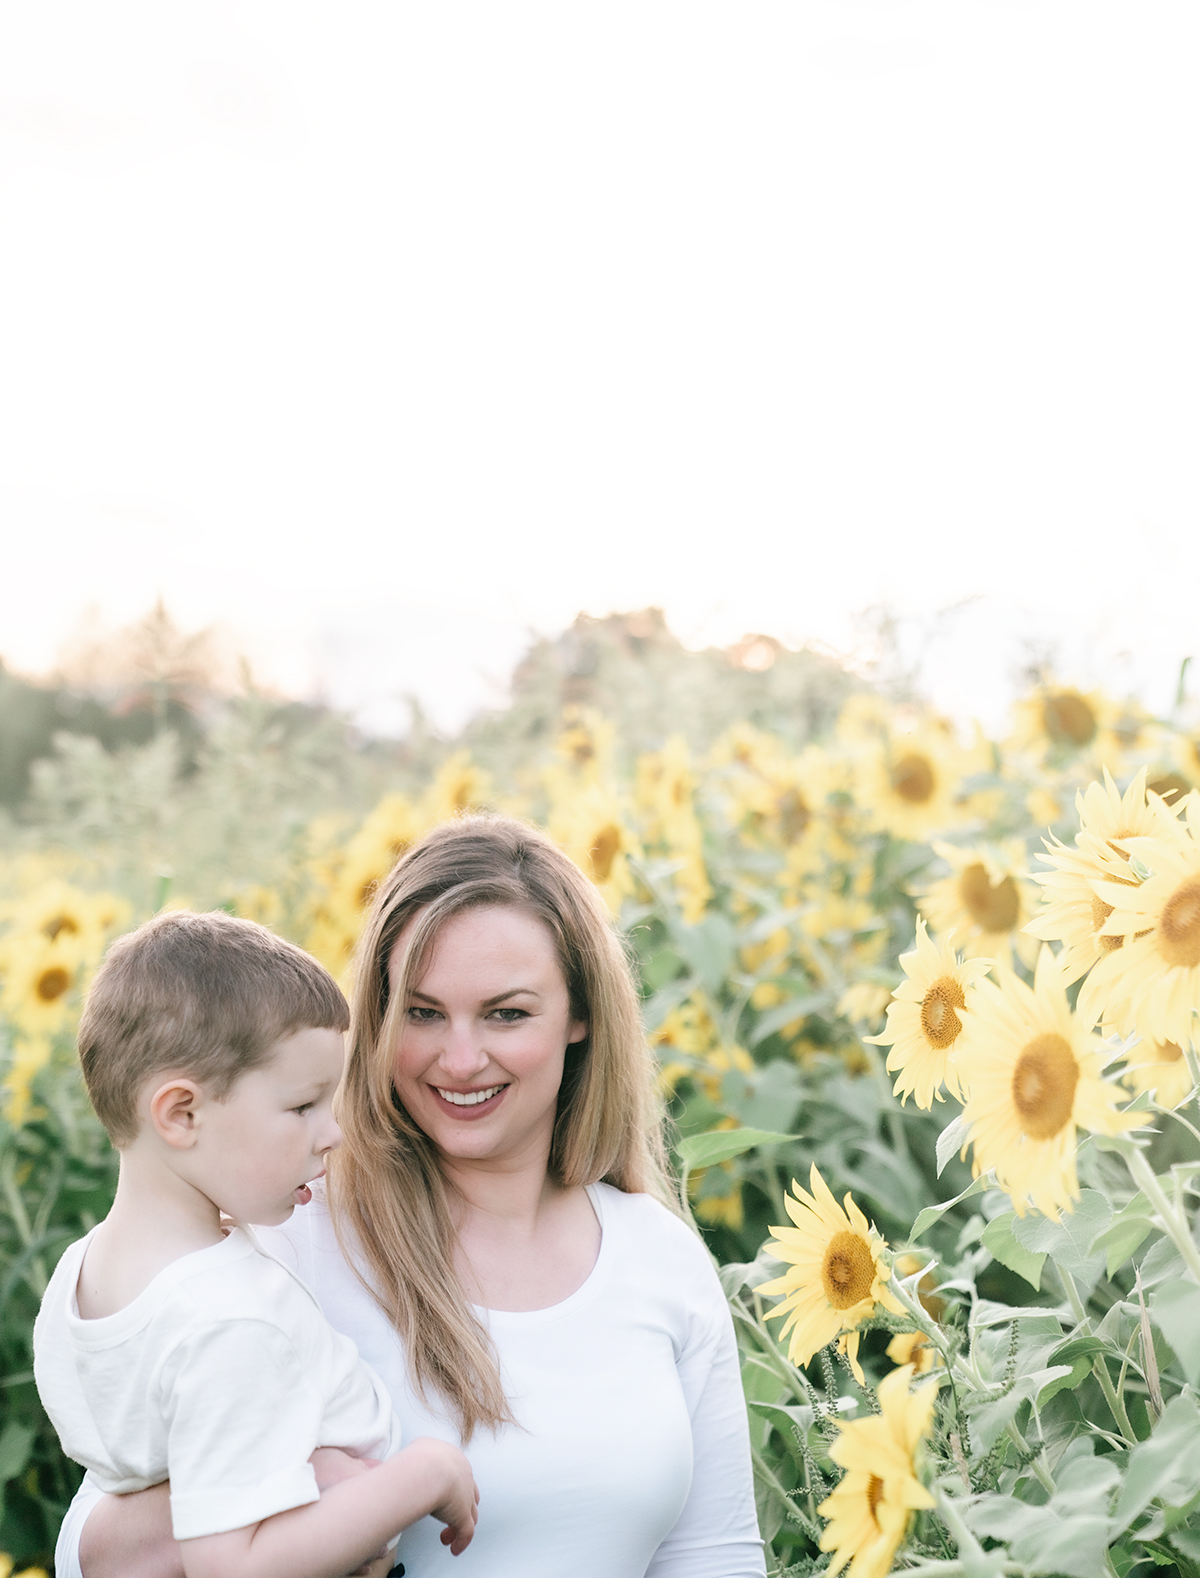 Visiting The Sunflower Fields 2019 - Jen Elizabeth's Journals